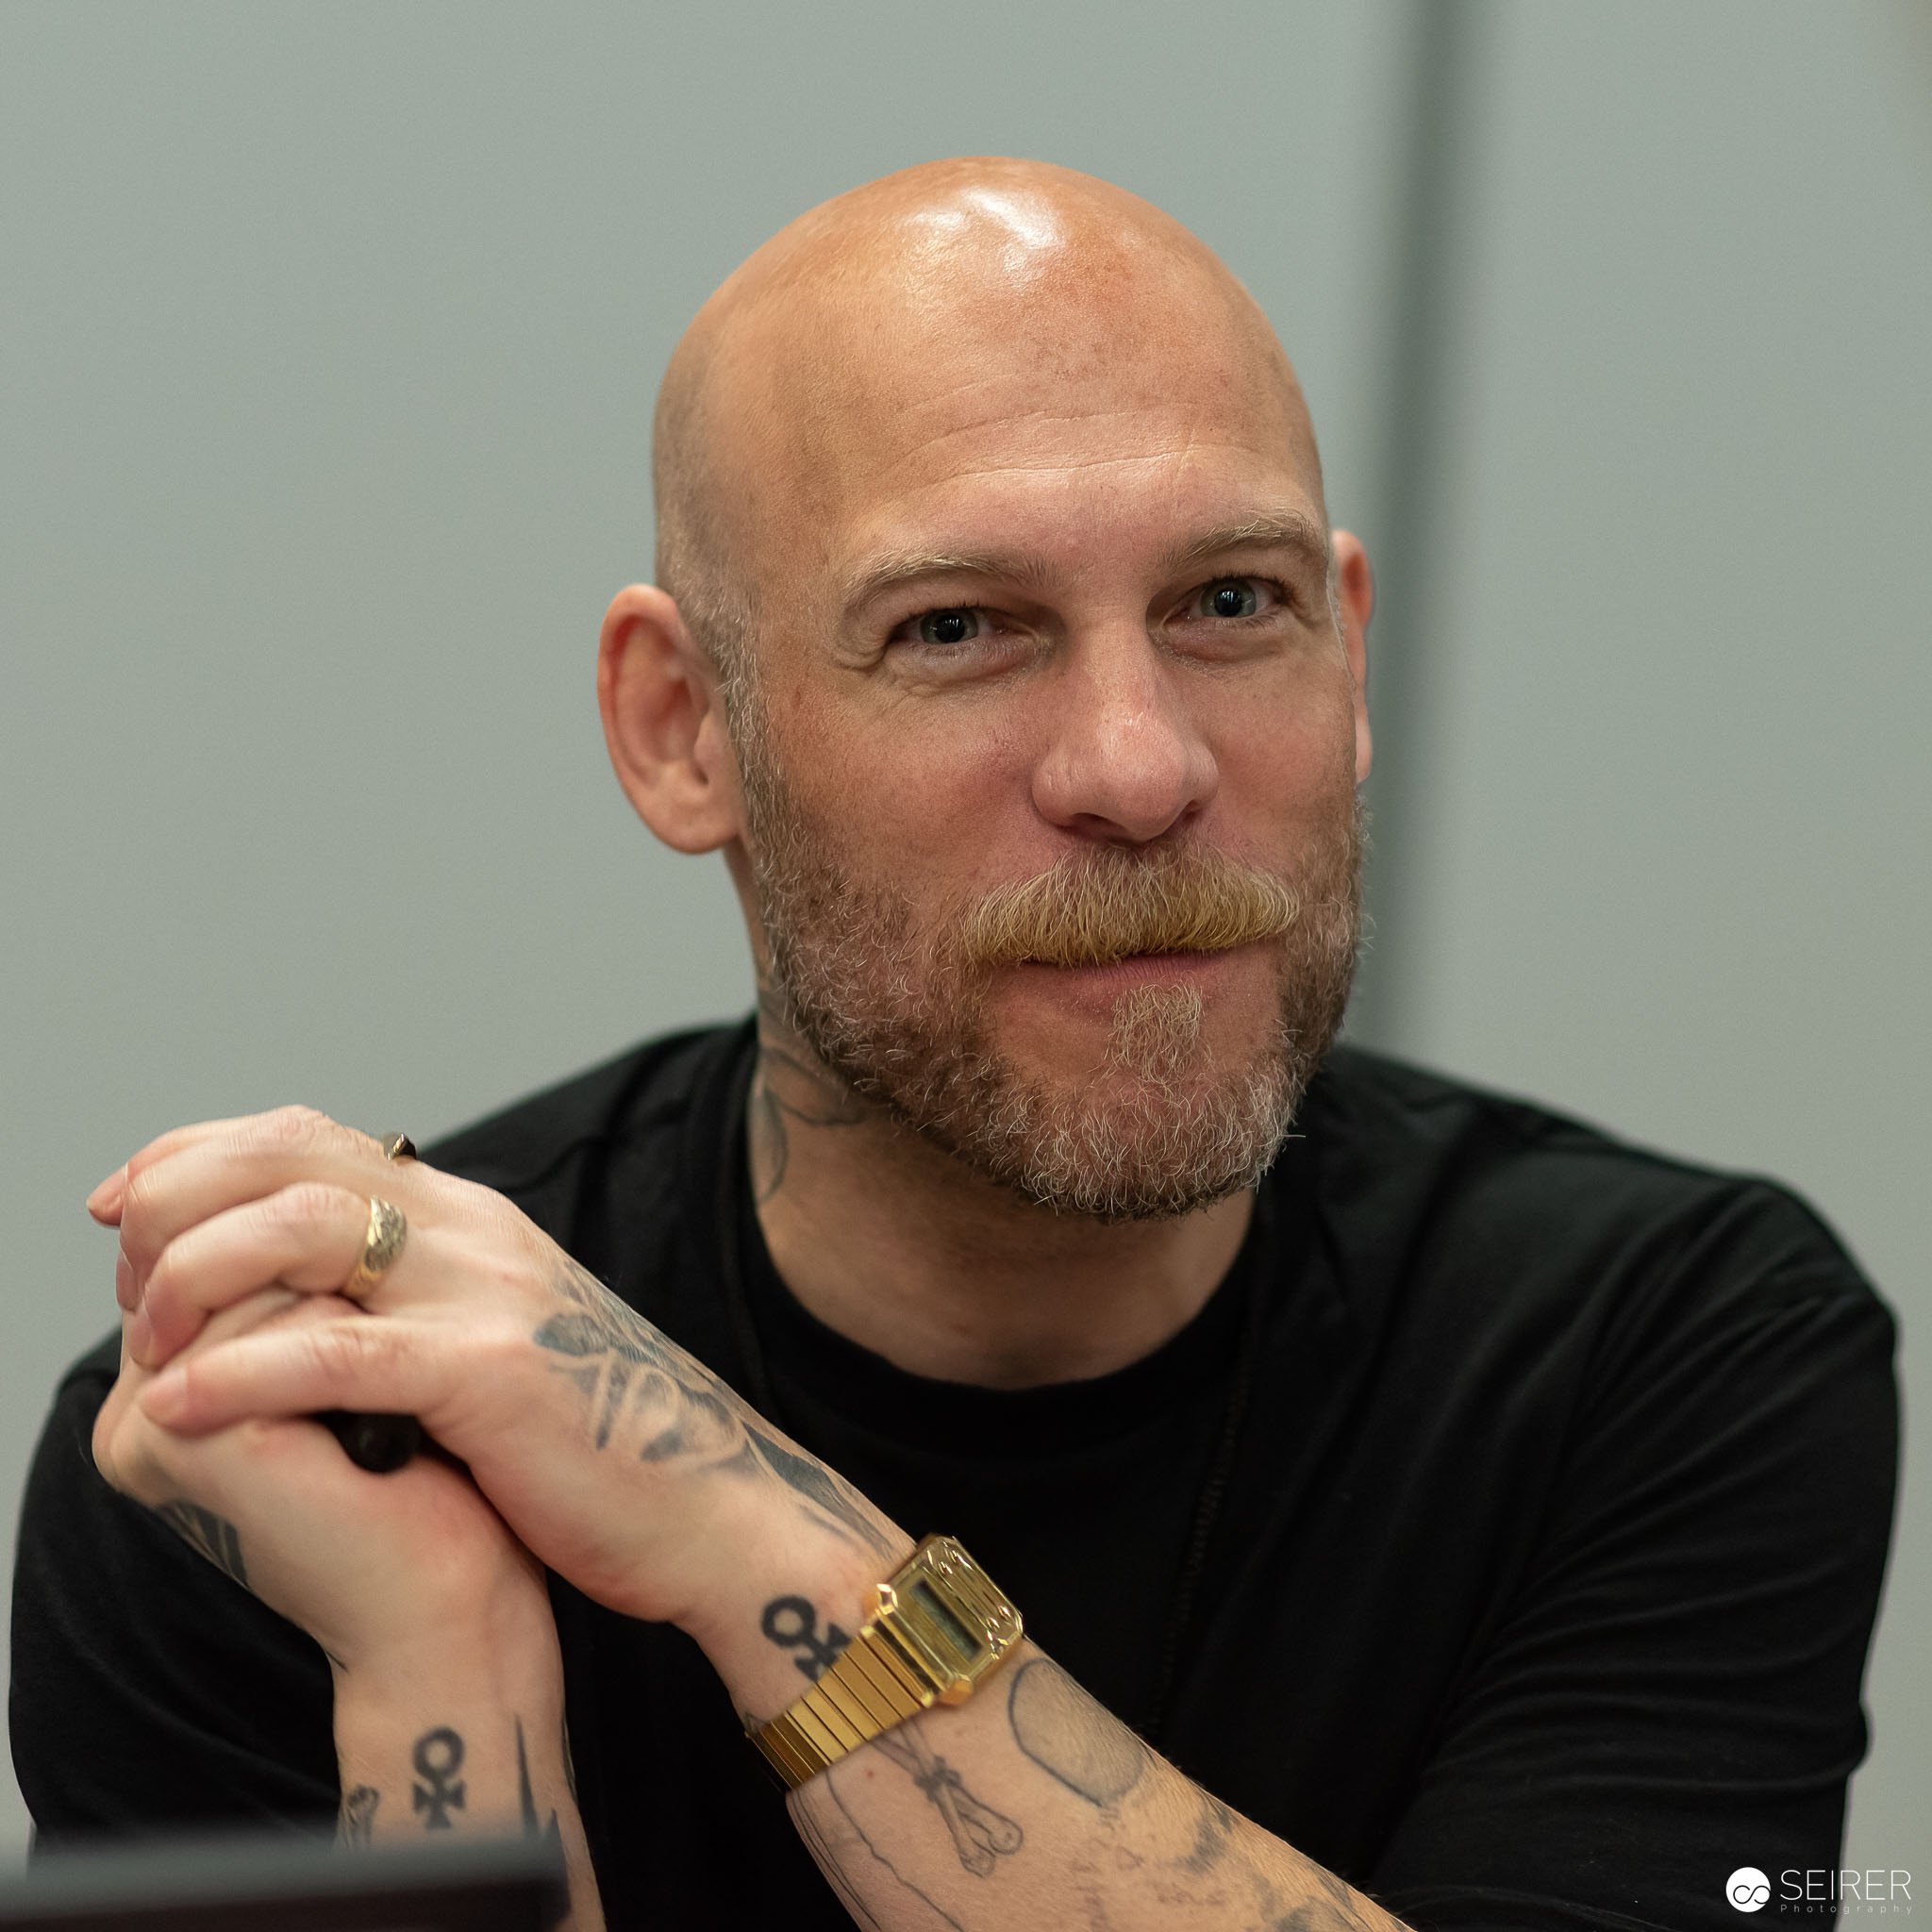 Martyn Marsland Mills (@madebymartyn on IG) at Vienna ComicCon 2022